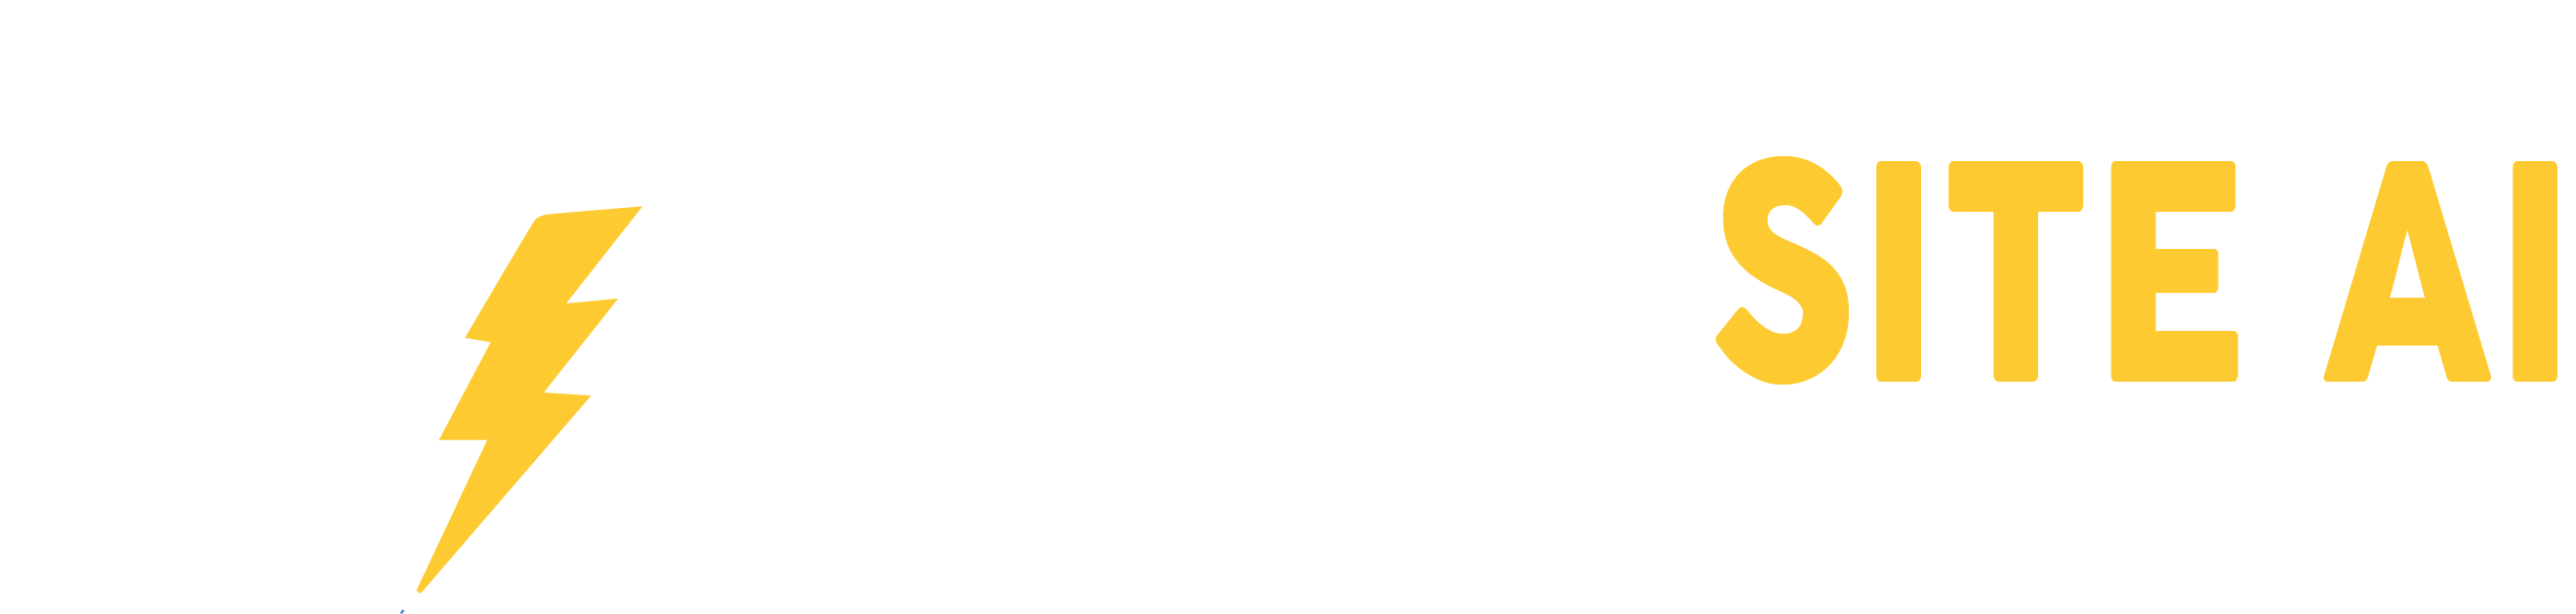 A shield with a checkmark, the checksite logo